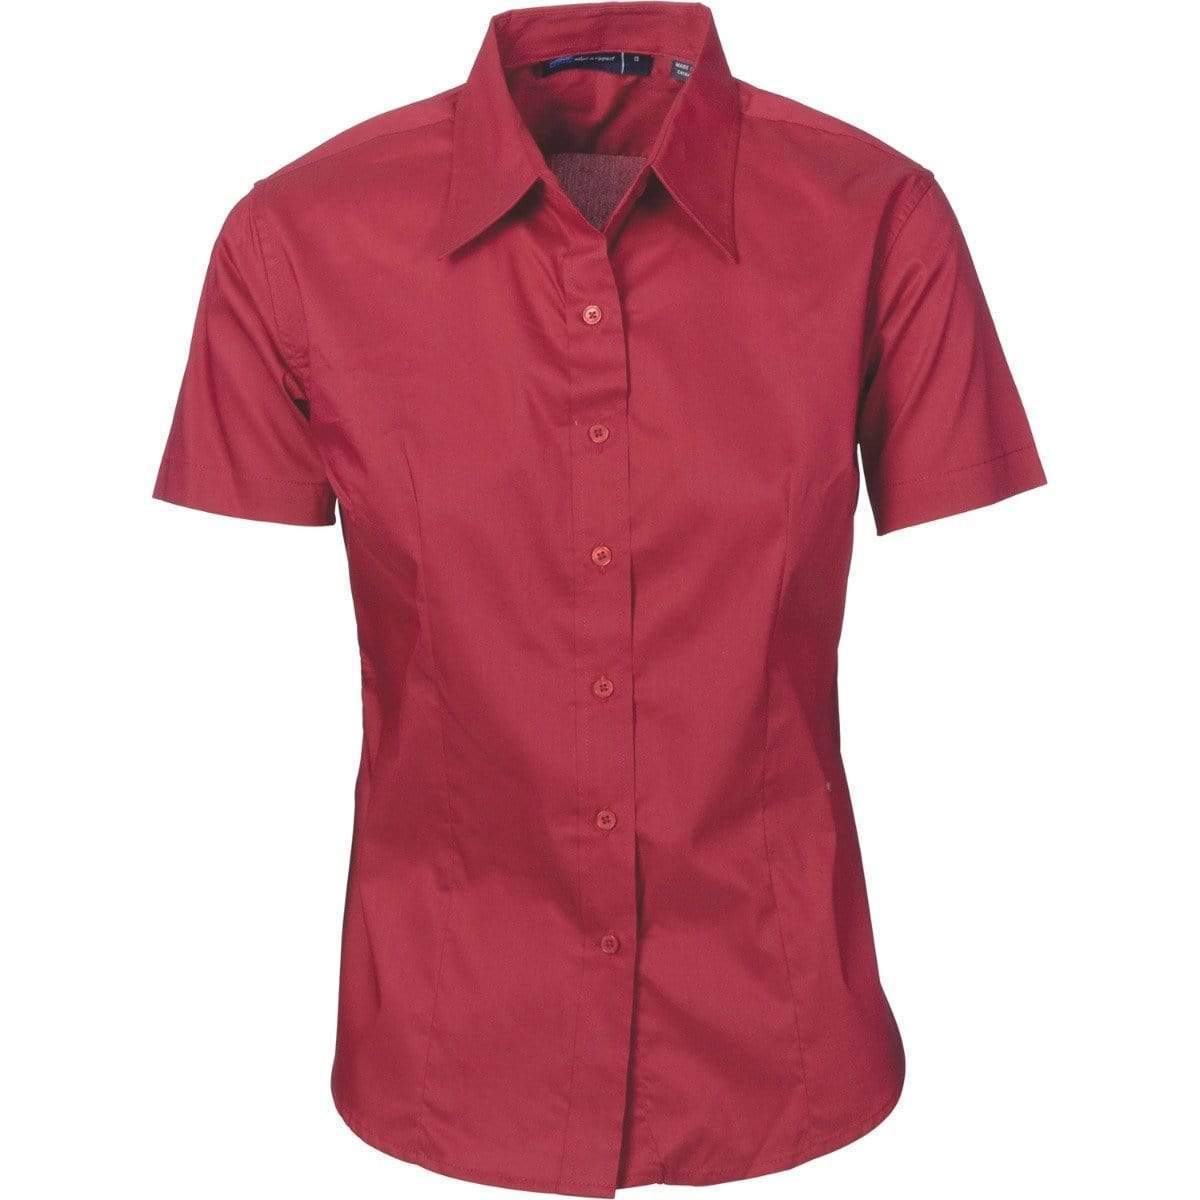 Dnc Workwear Ladies Premier Stretch Poplin Short Sleeve Business Shirt - 4231 Corporate Wear DNC Workwear Cherry 6 